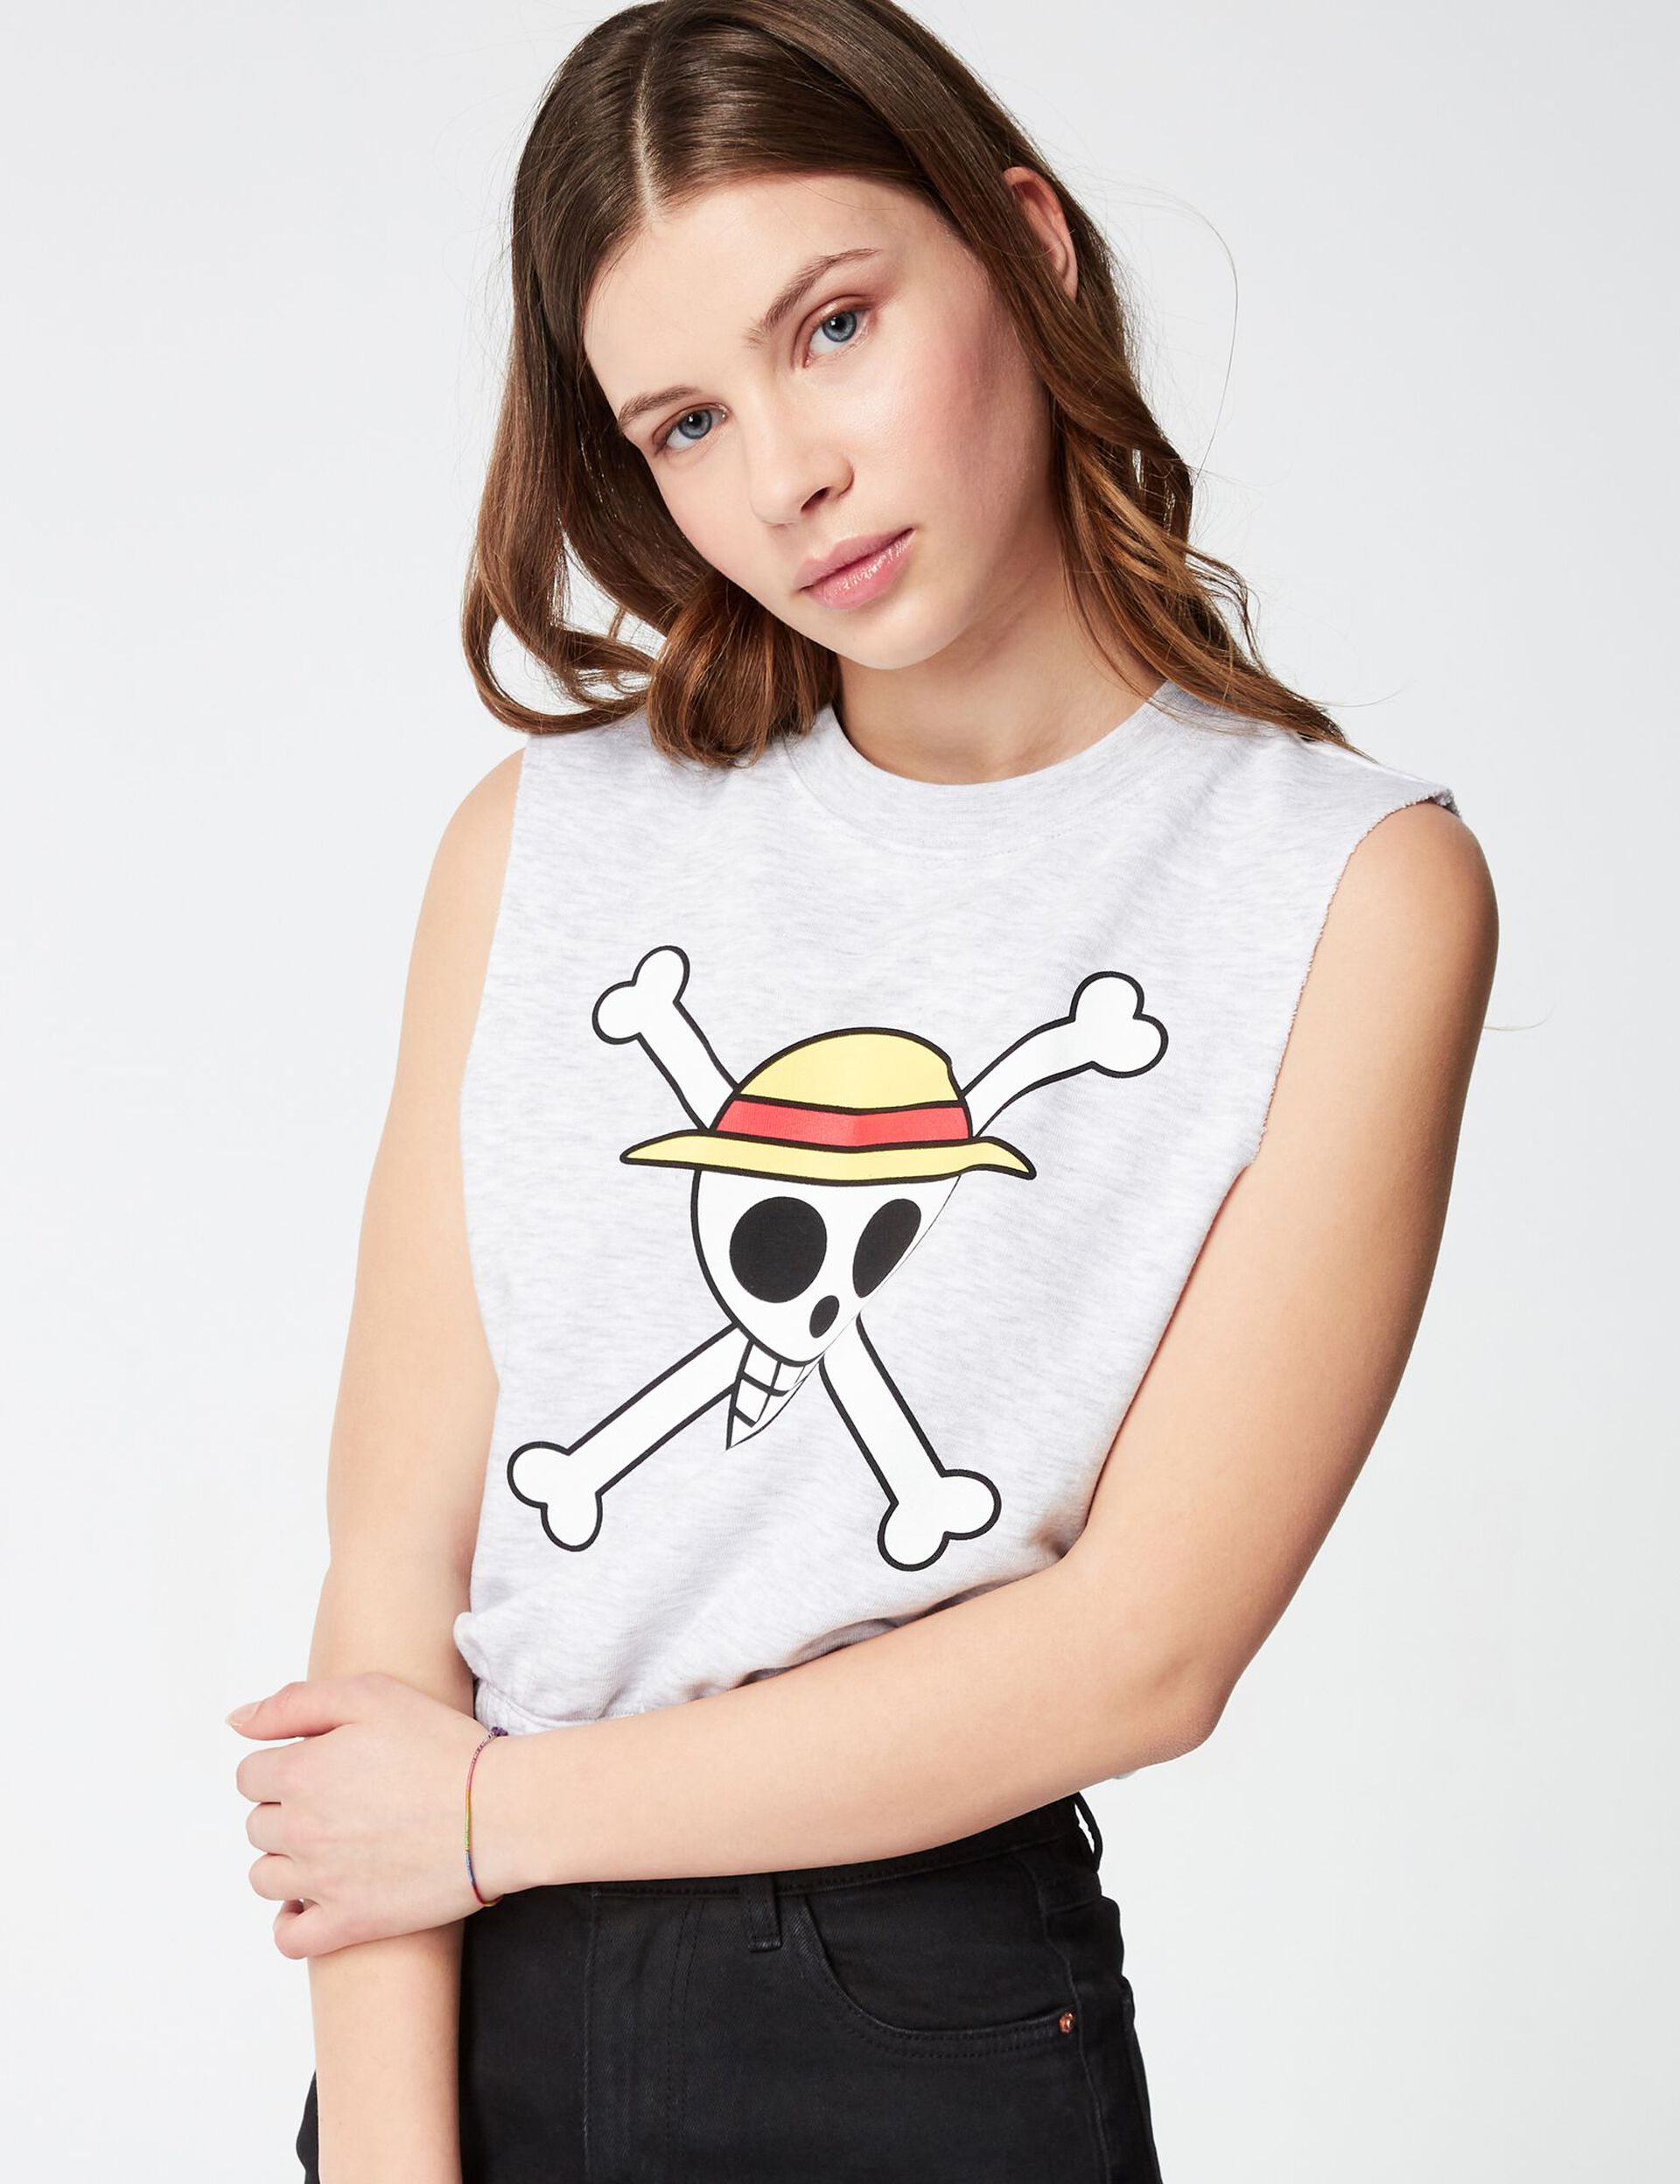 One Piece sleeveless sweatshirt